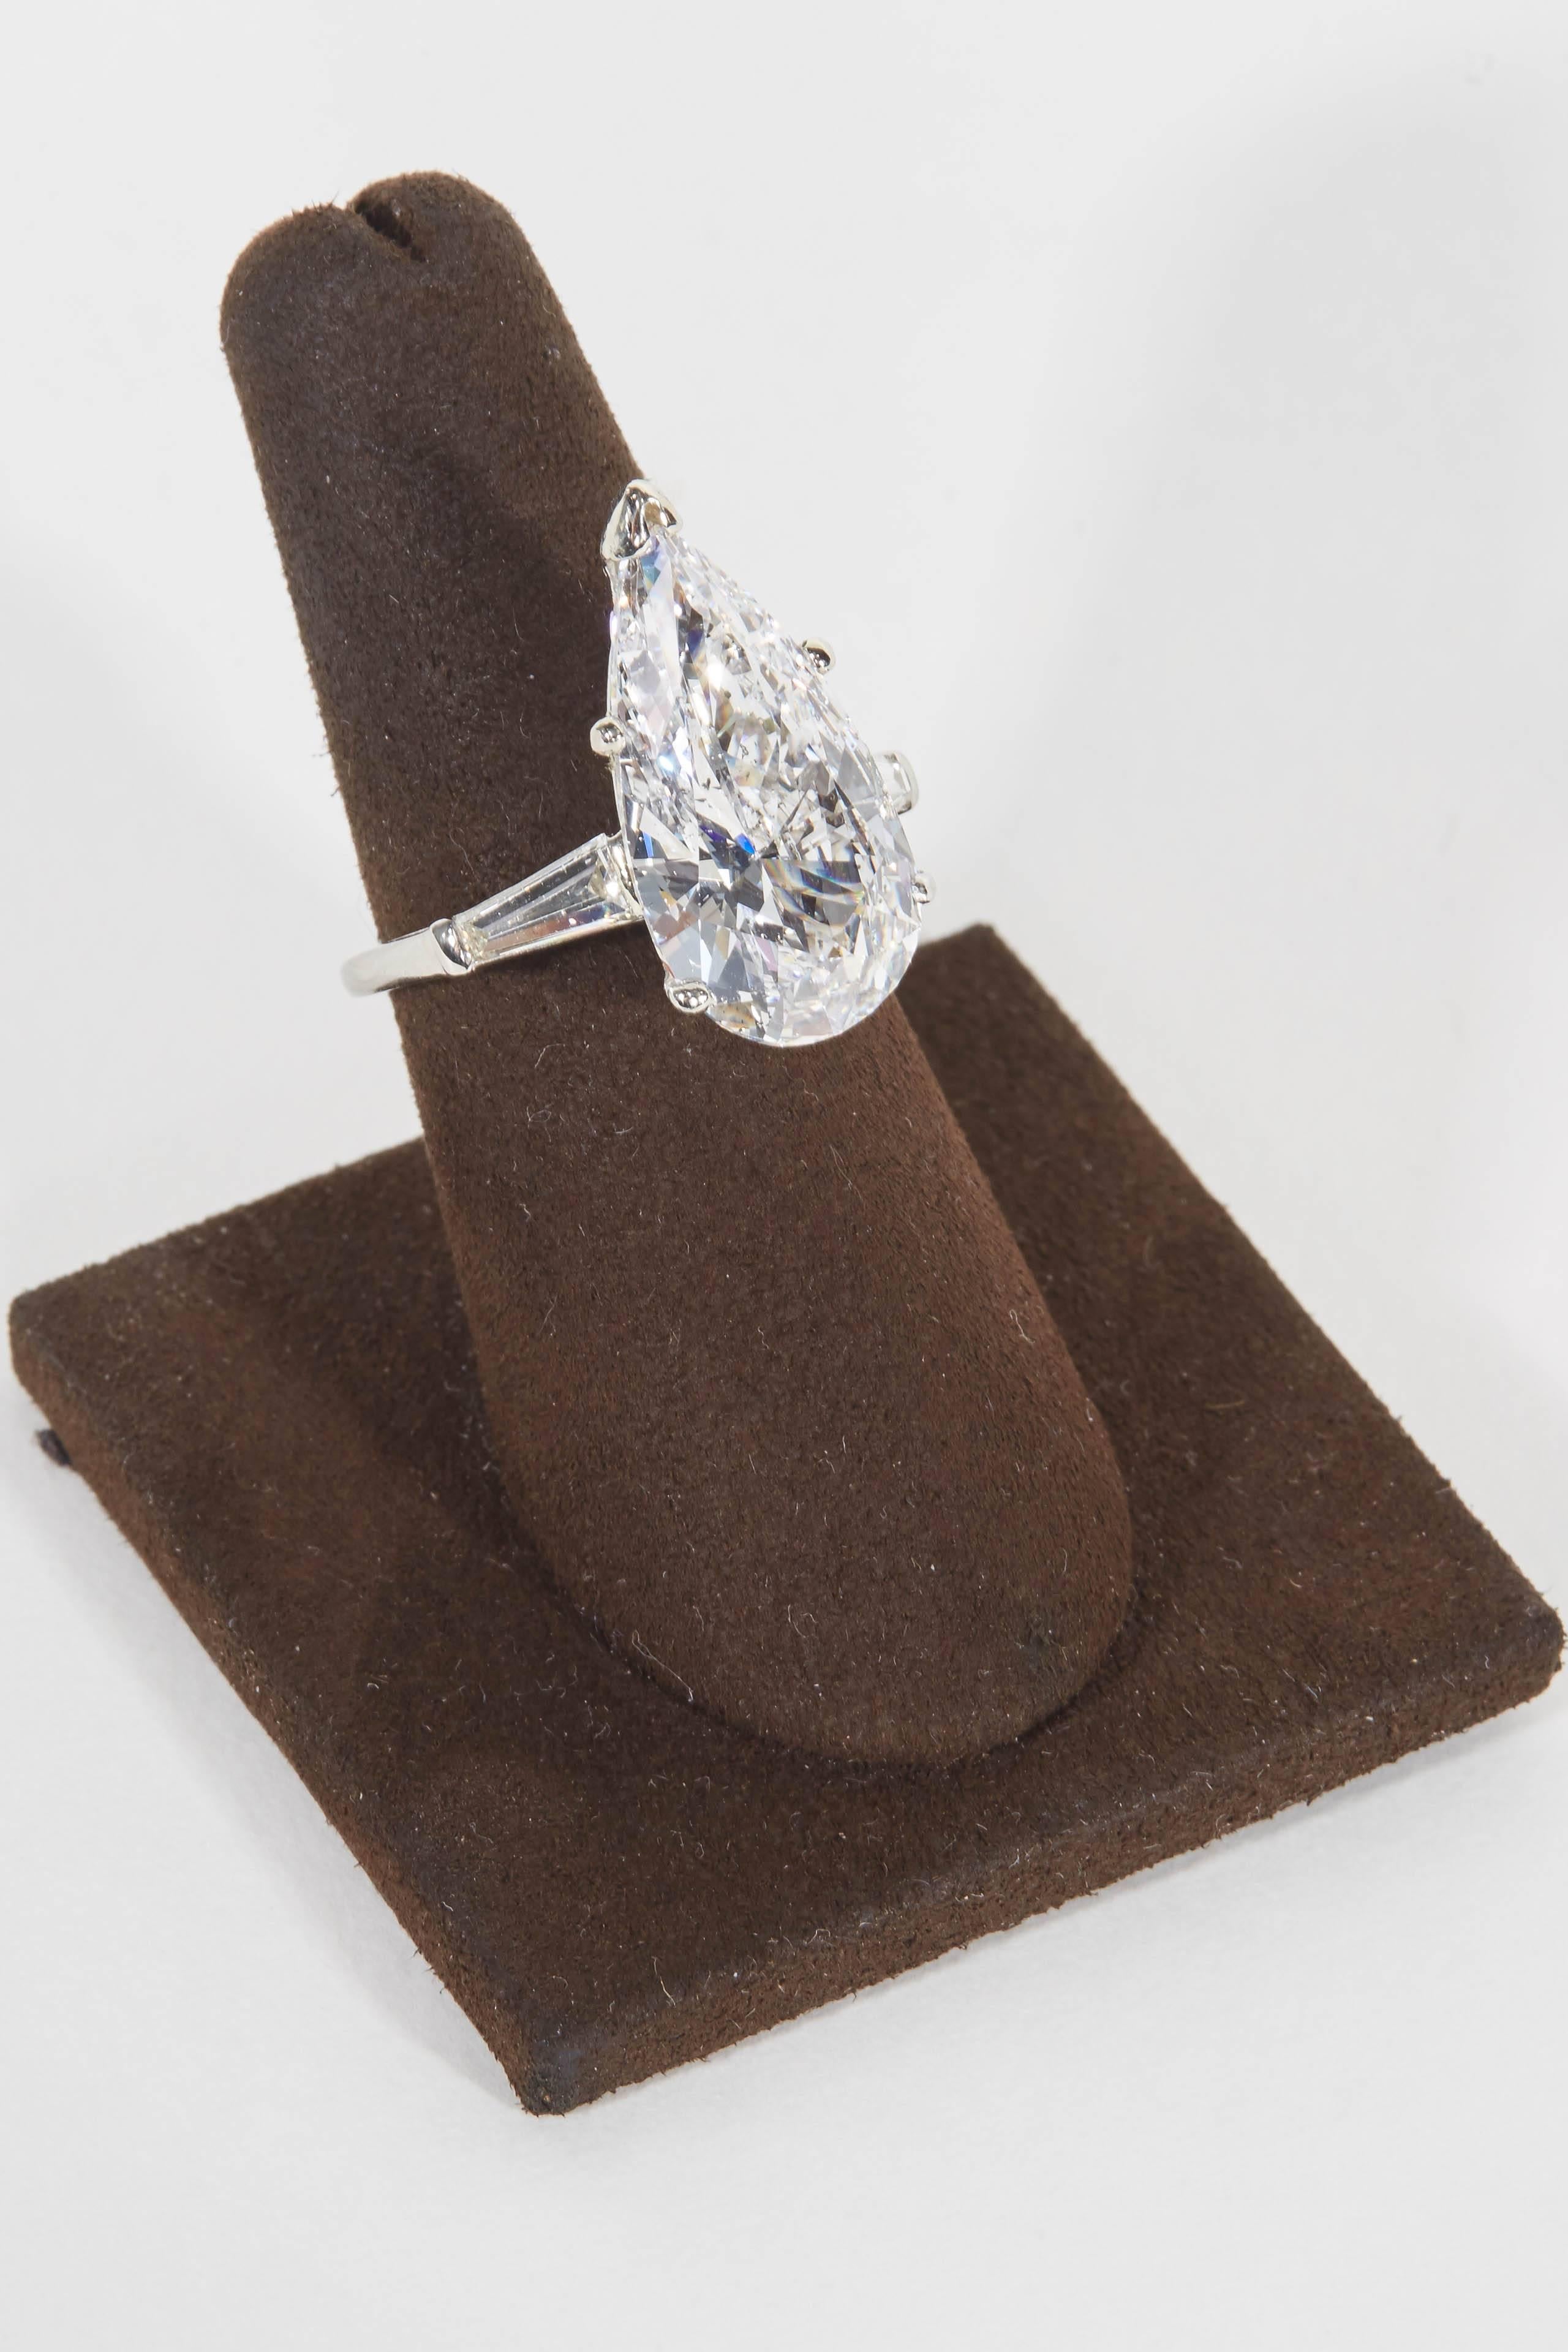 8 carat pear shaped diamond ring